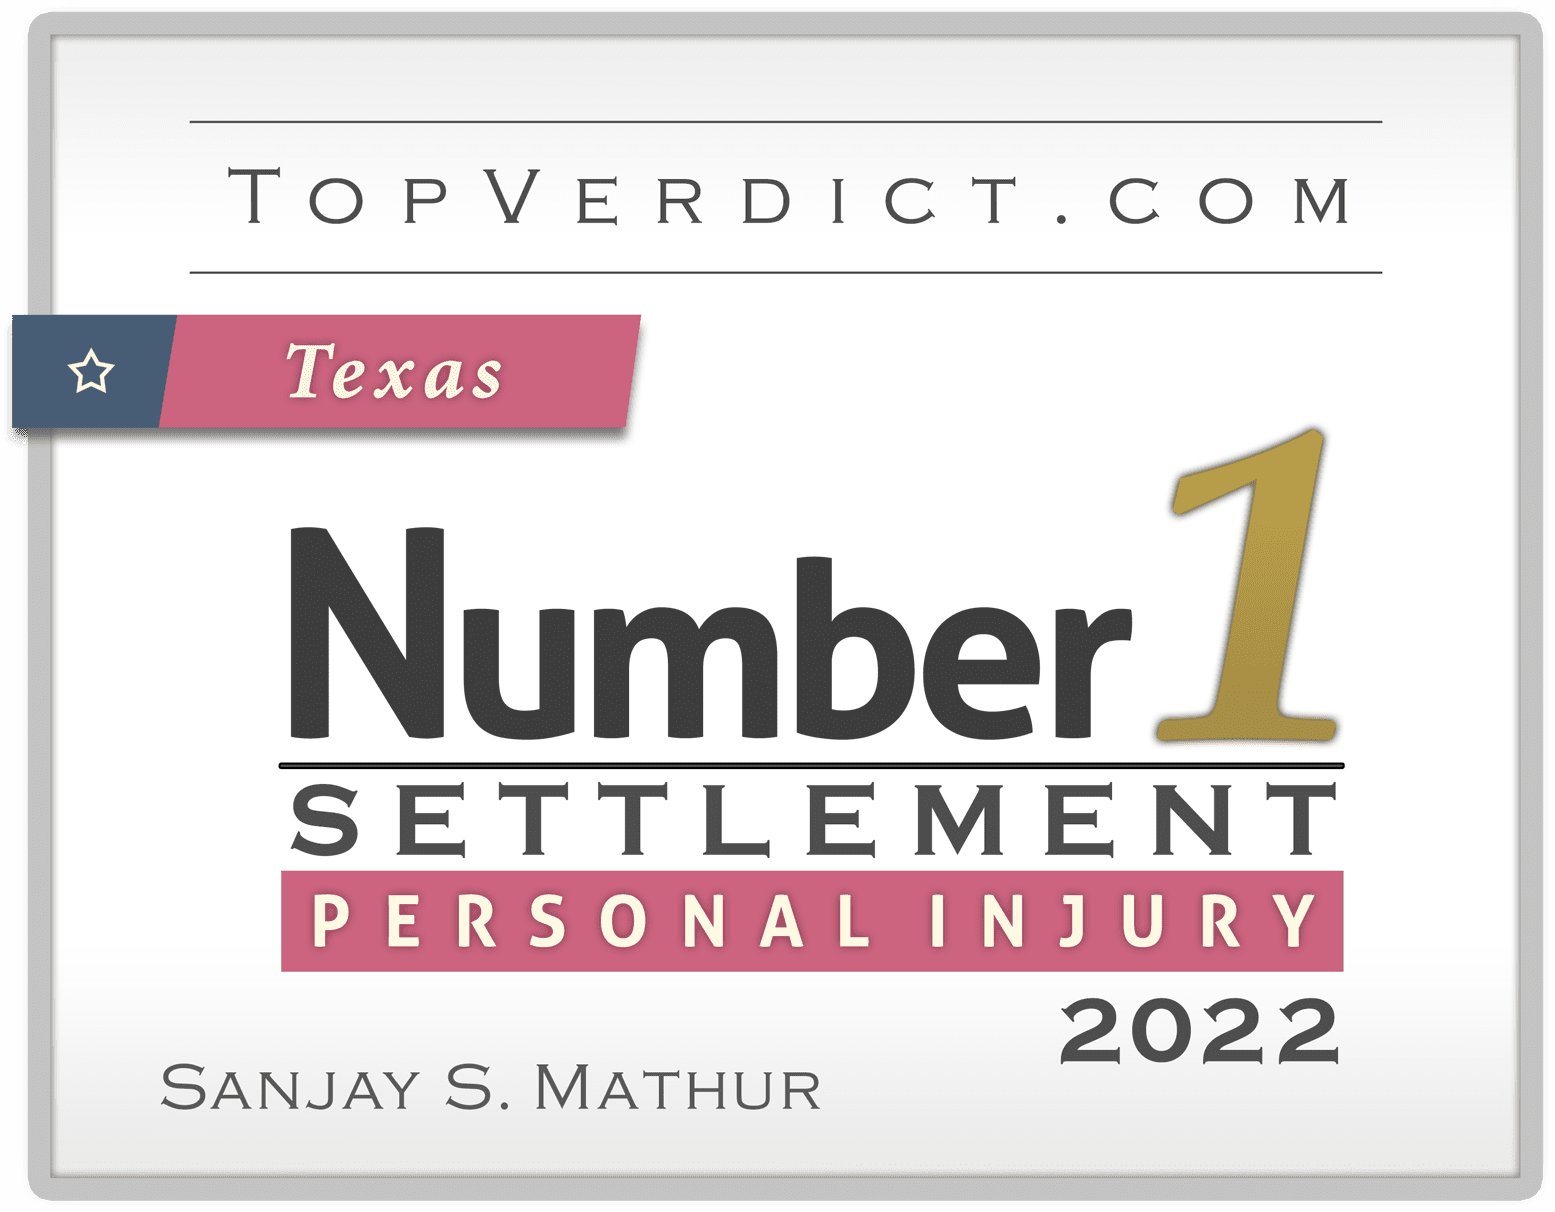 Texas Number 1 Settlement - PI